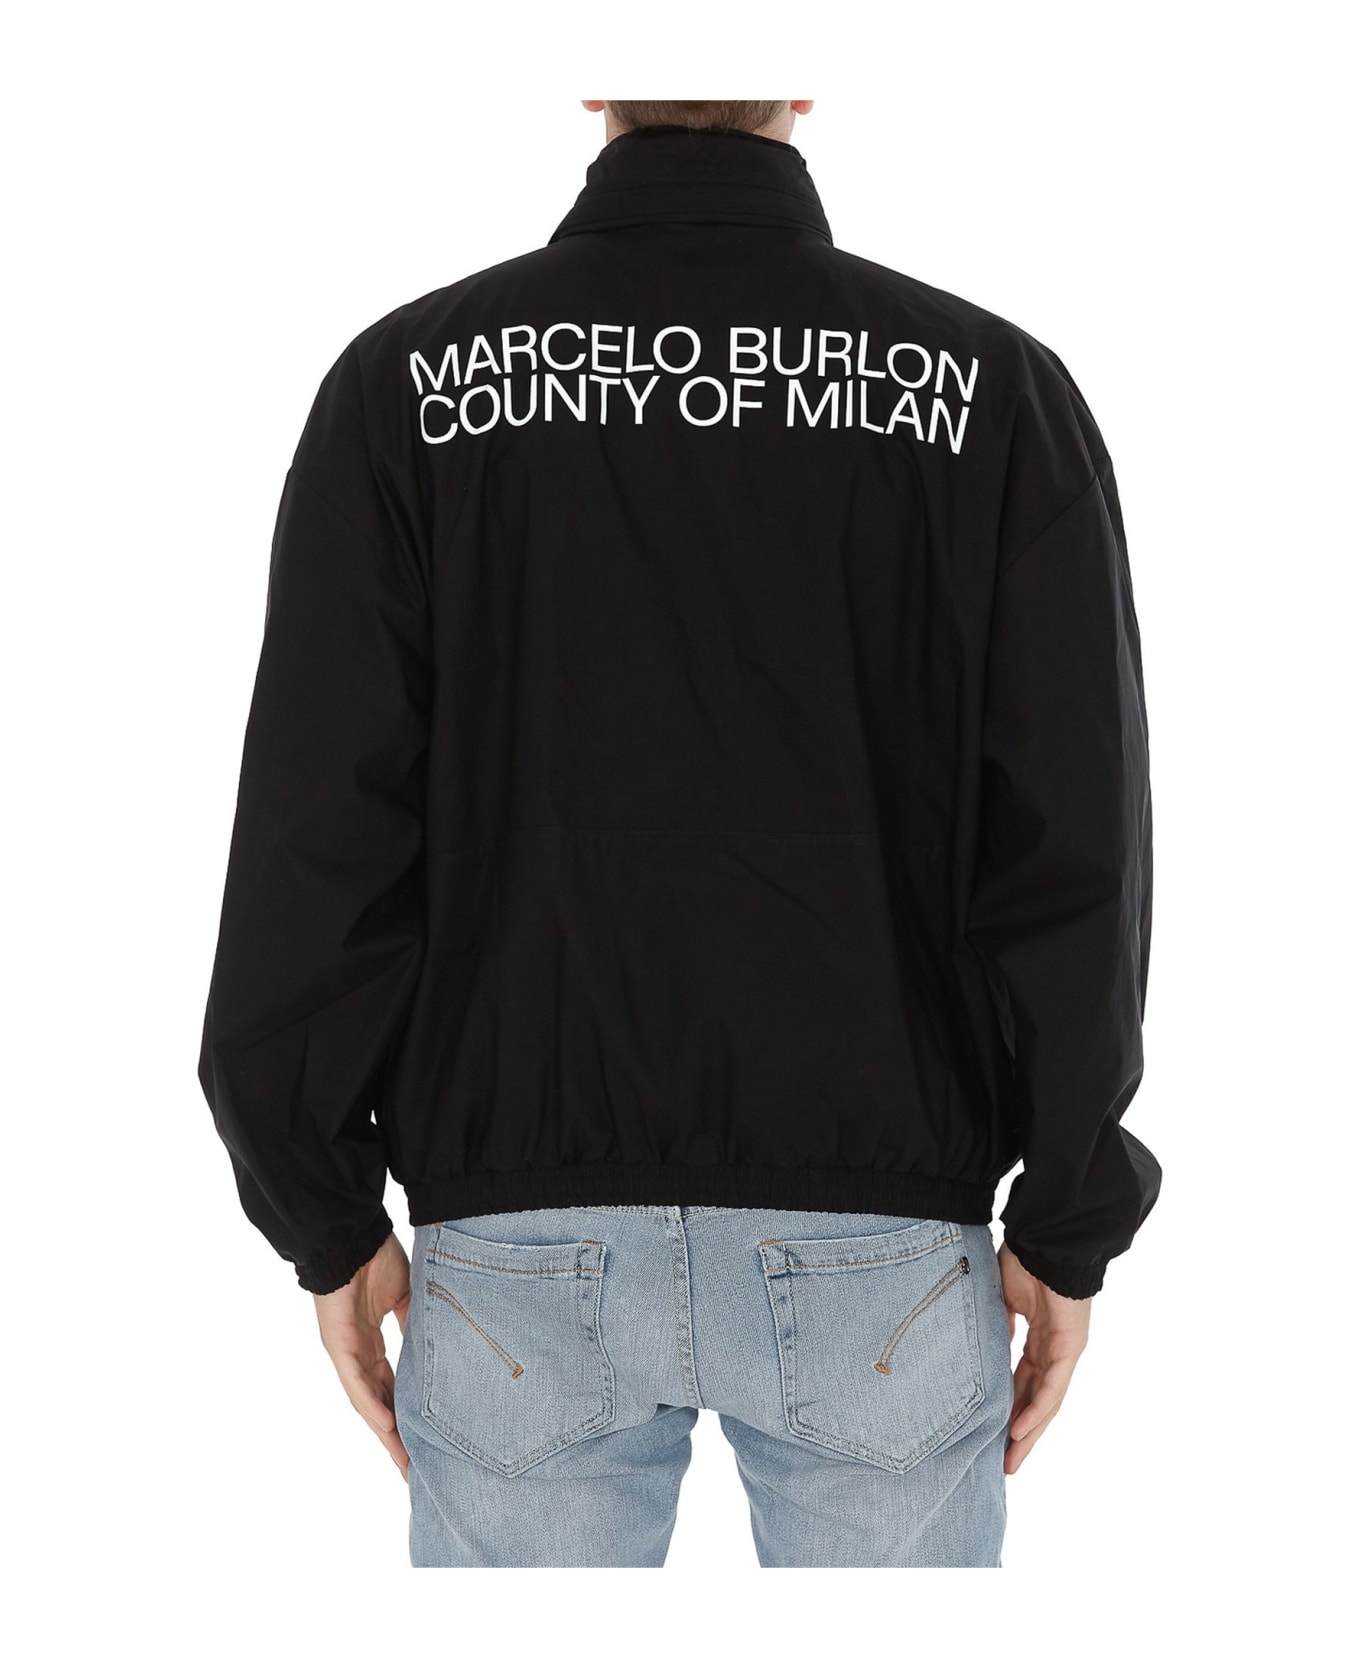 Marcelo Burlon County Of Milan Jacket - Black ジャケット